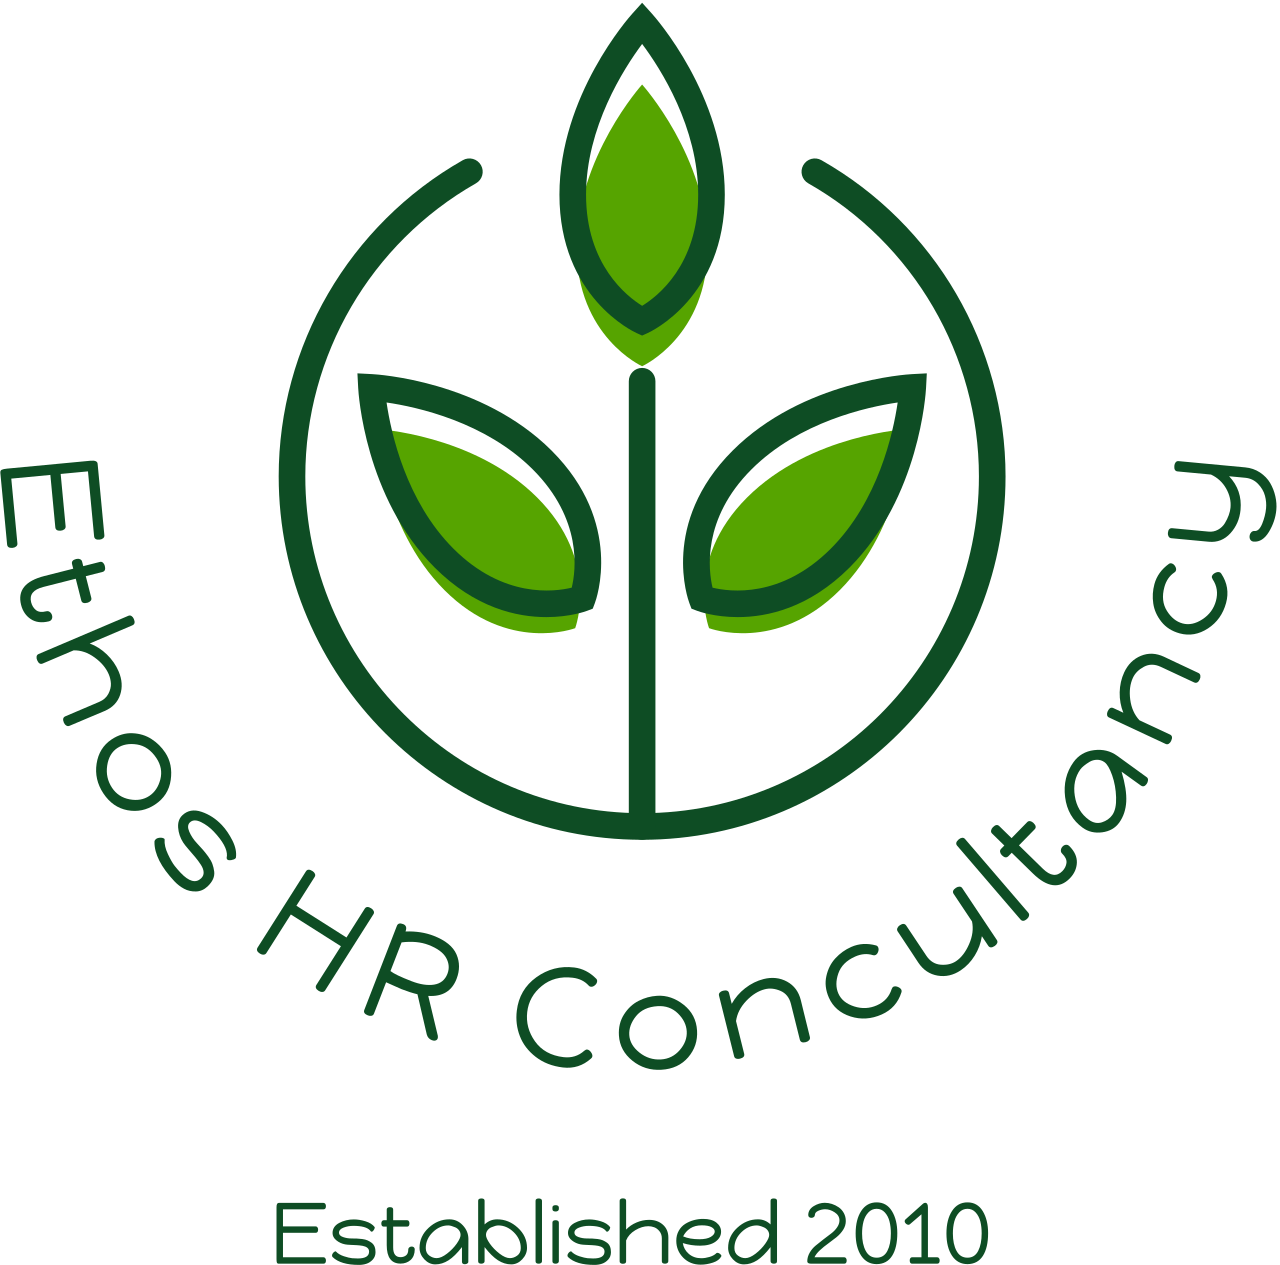 Ethos HR Concultancy's logo